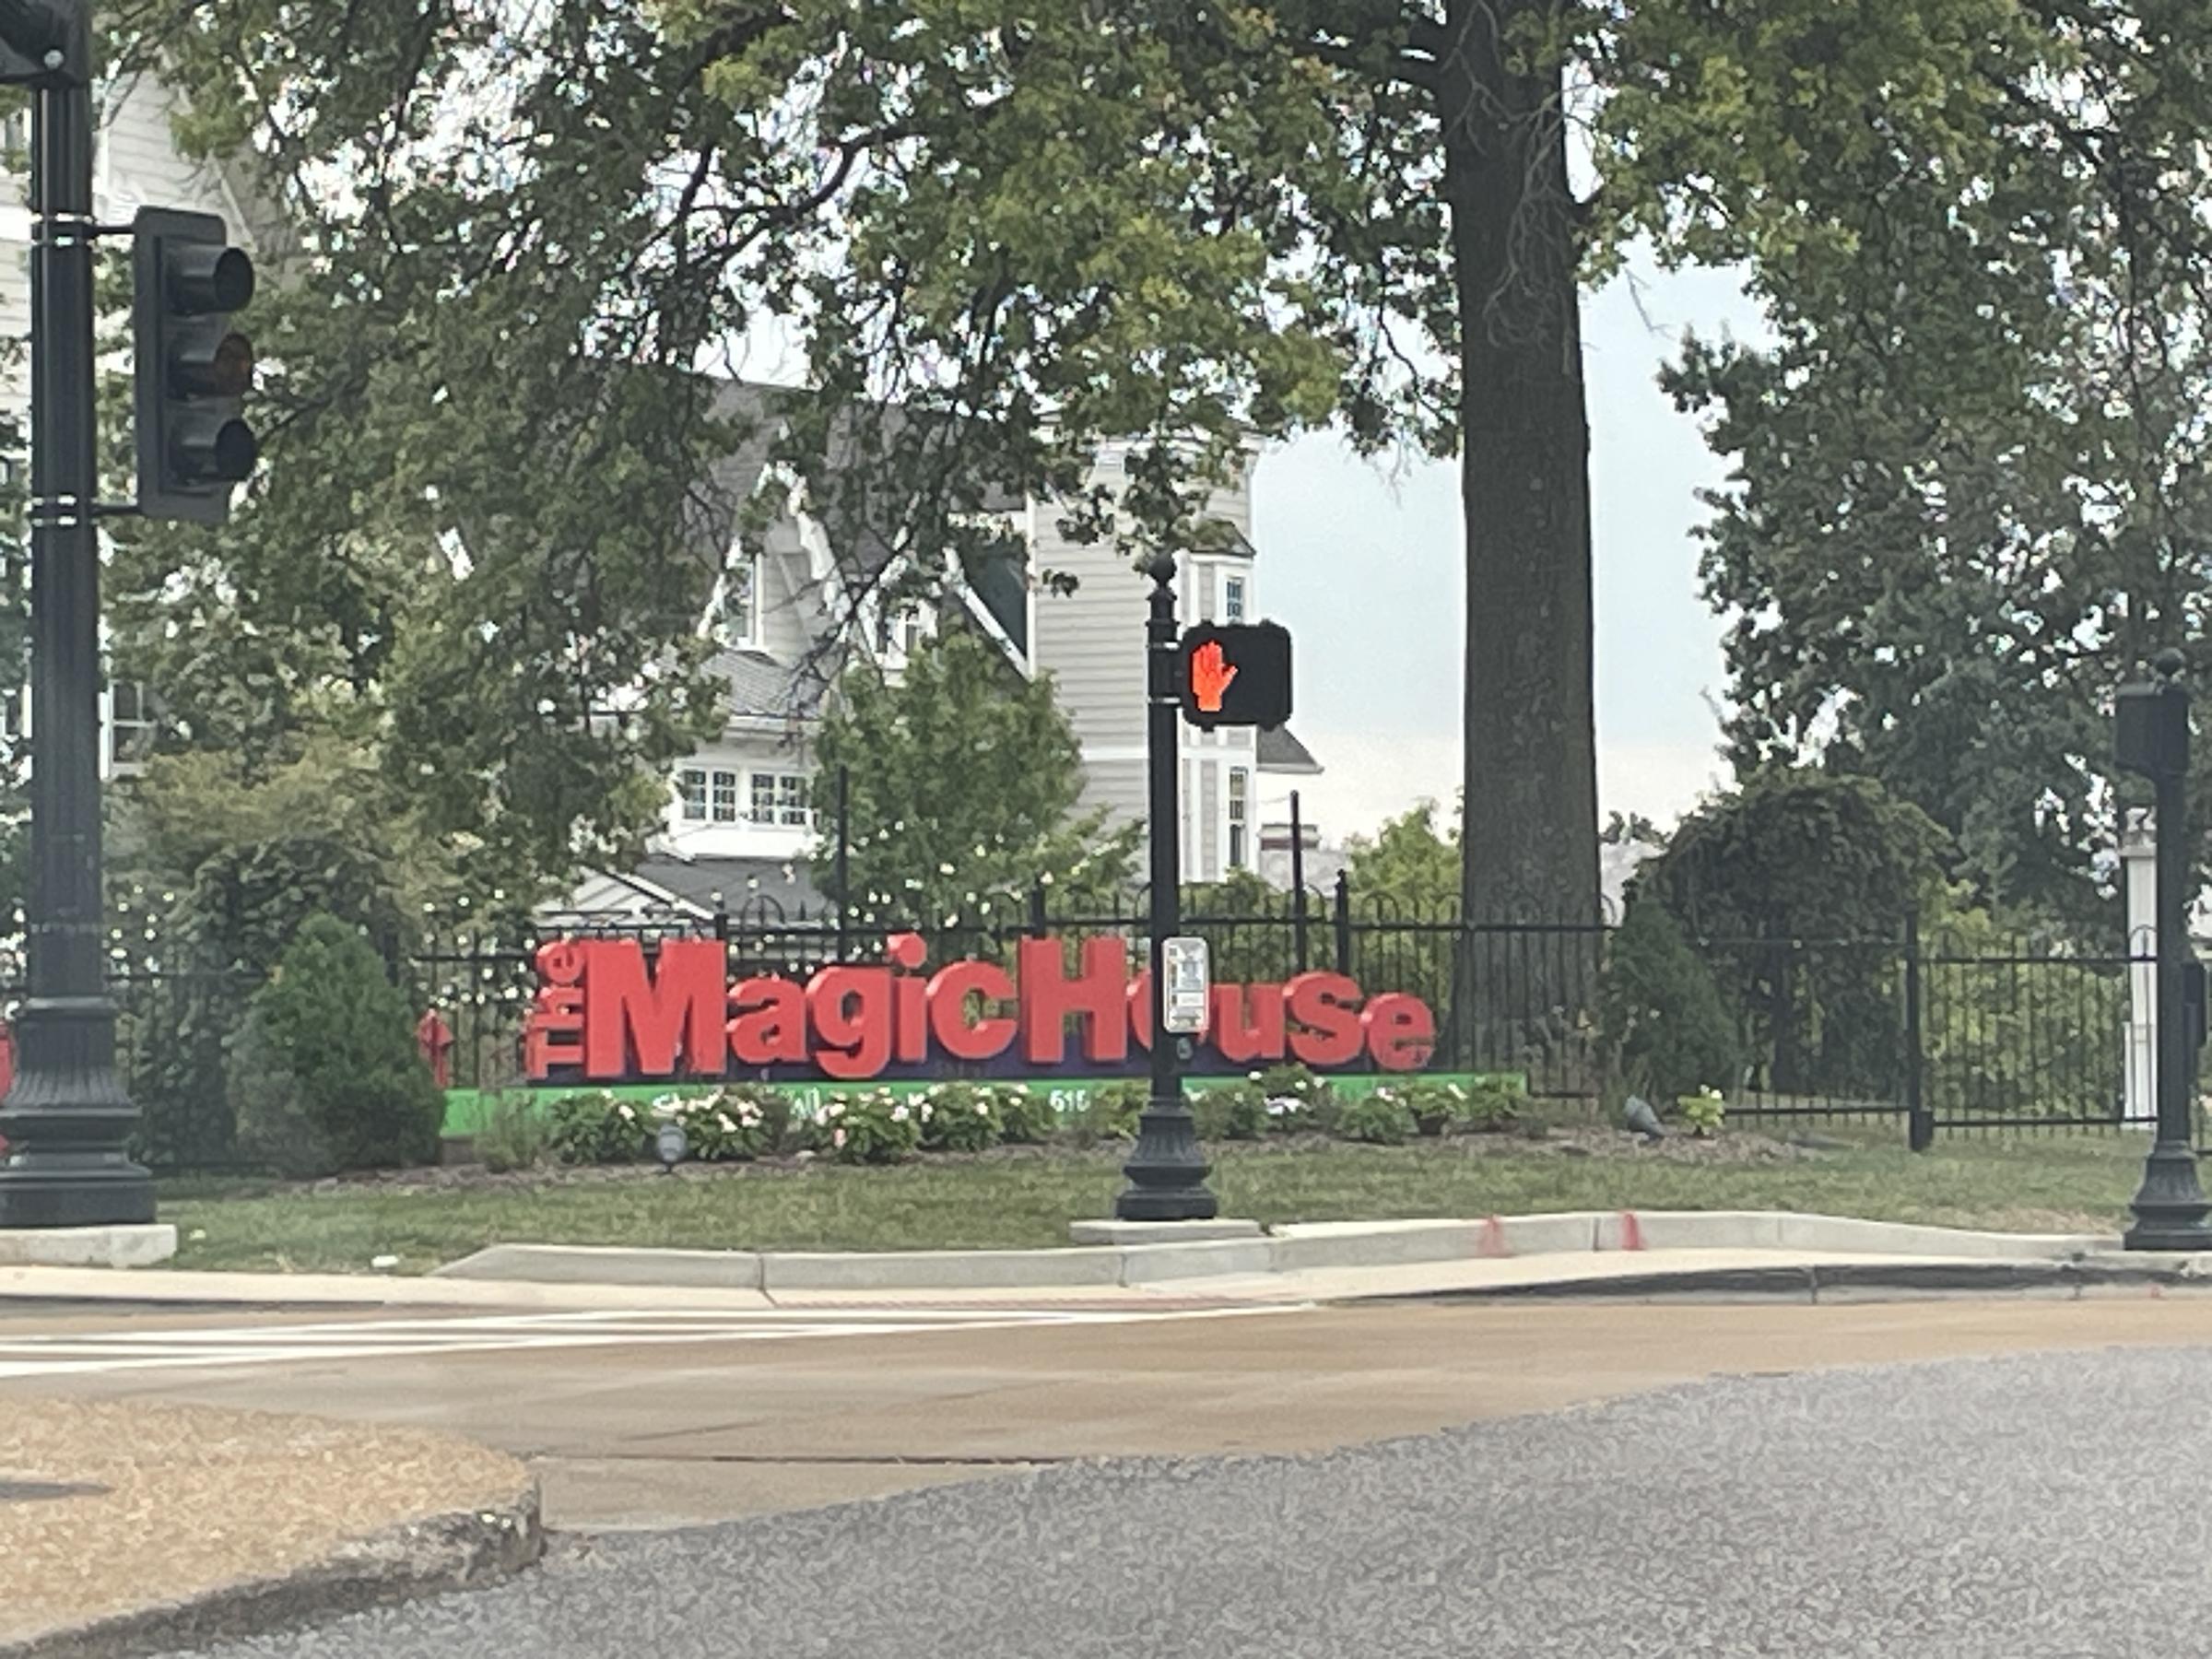 The Magic House - St. Louis Children's Museum